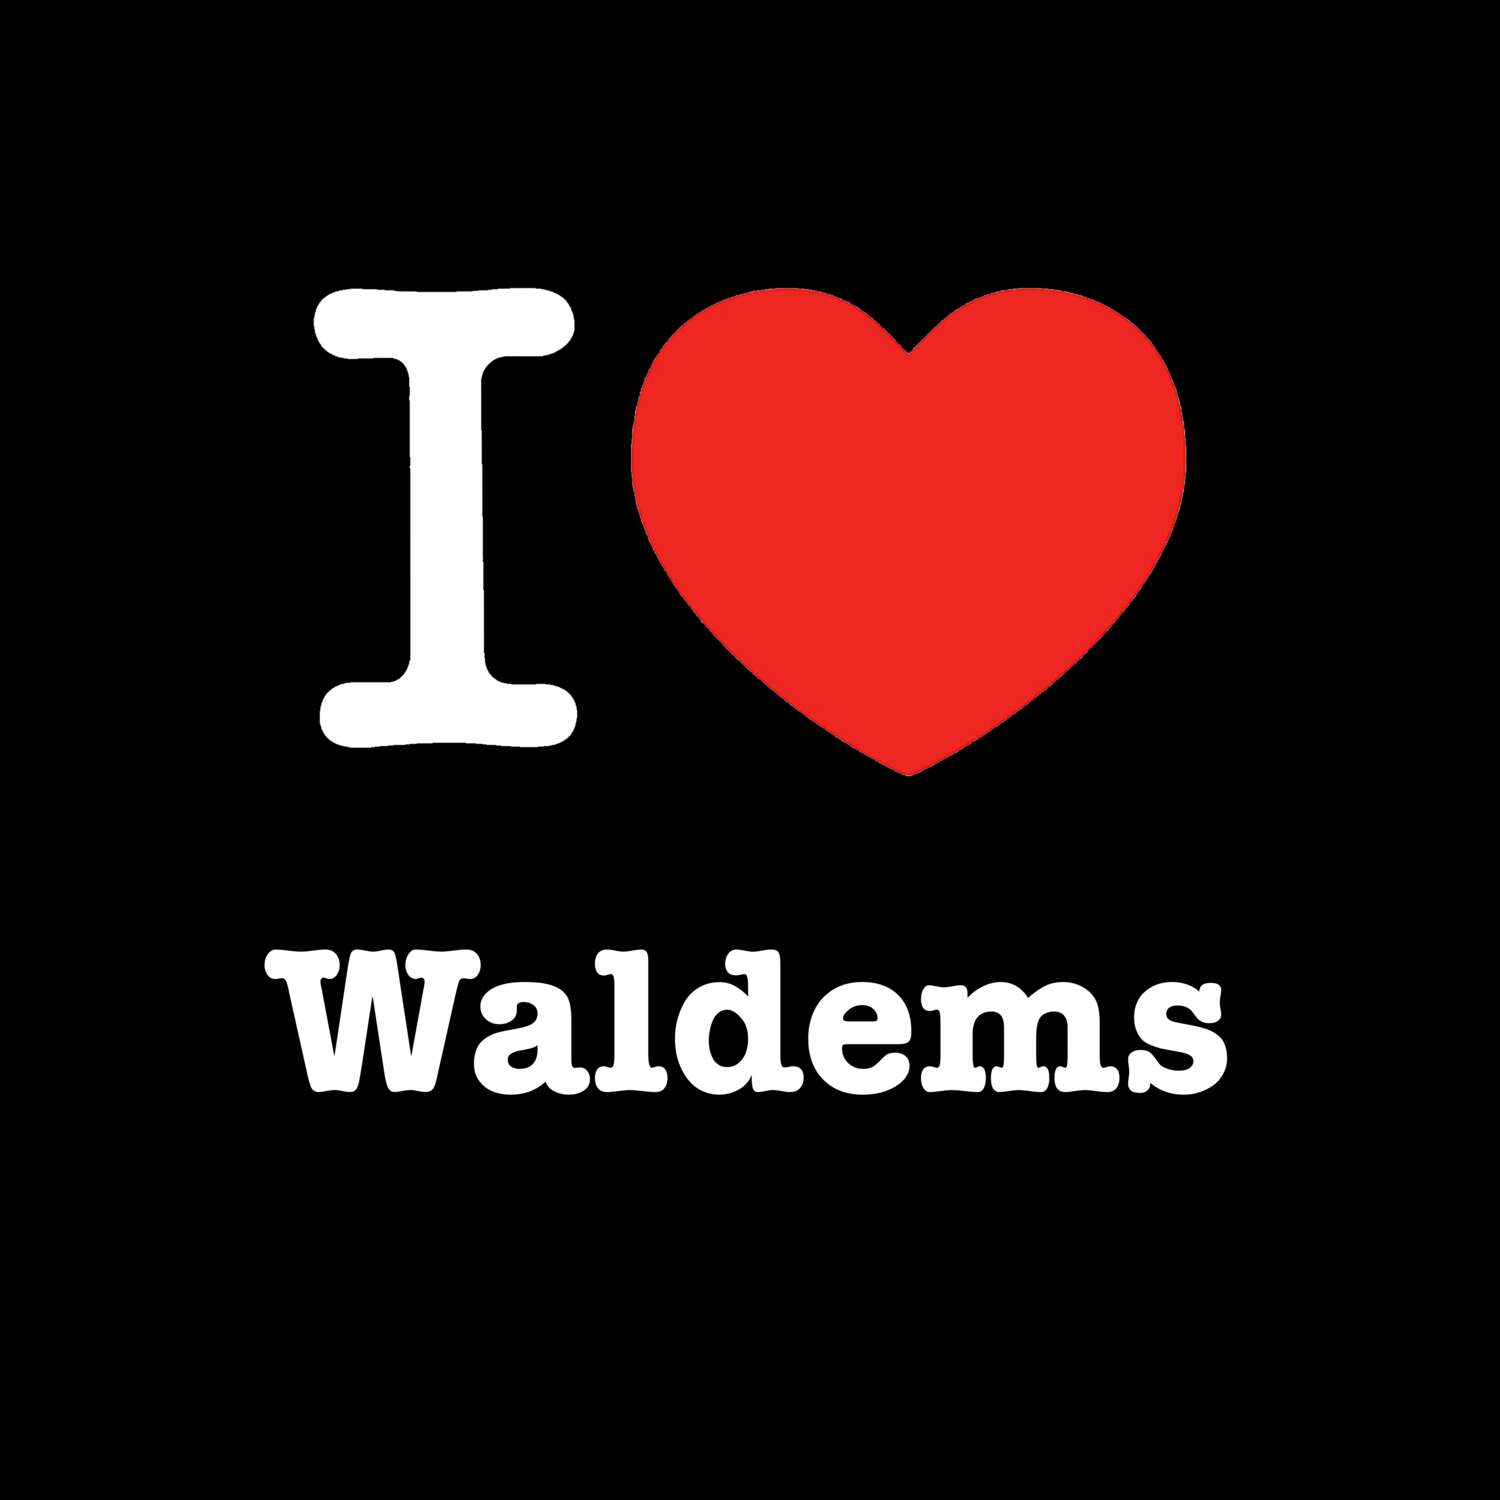 Waldems T-Shirt »I love«